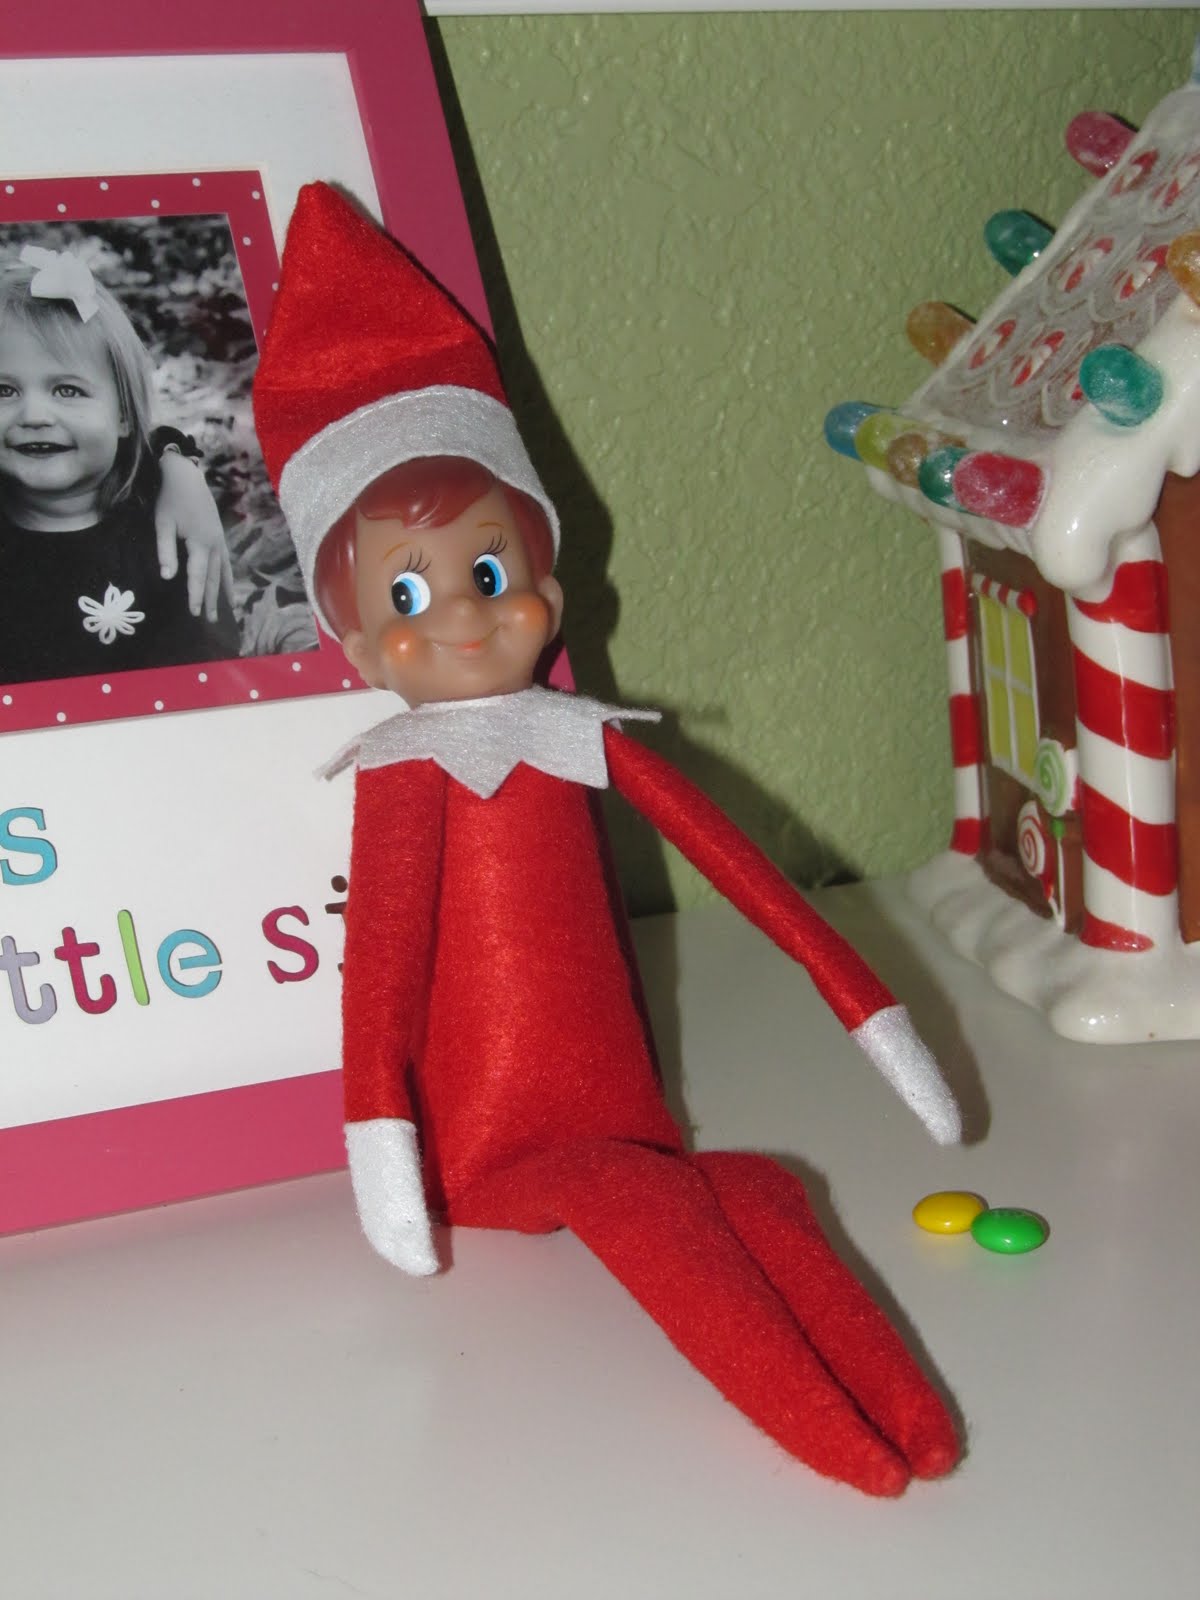 A Peek at the Pachecos: Meet Buddy the Elf!